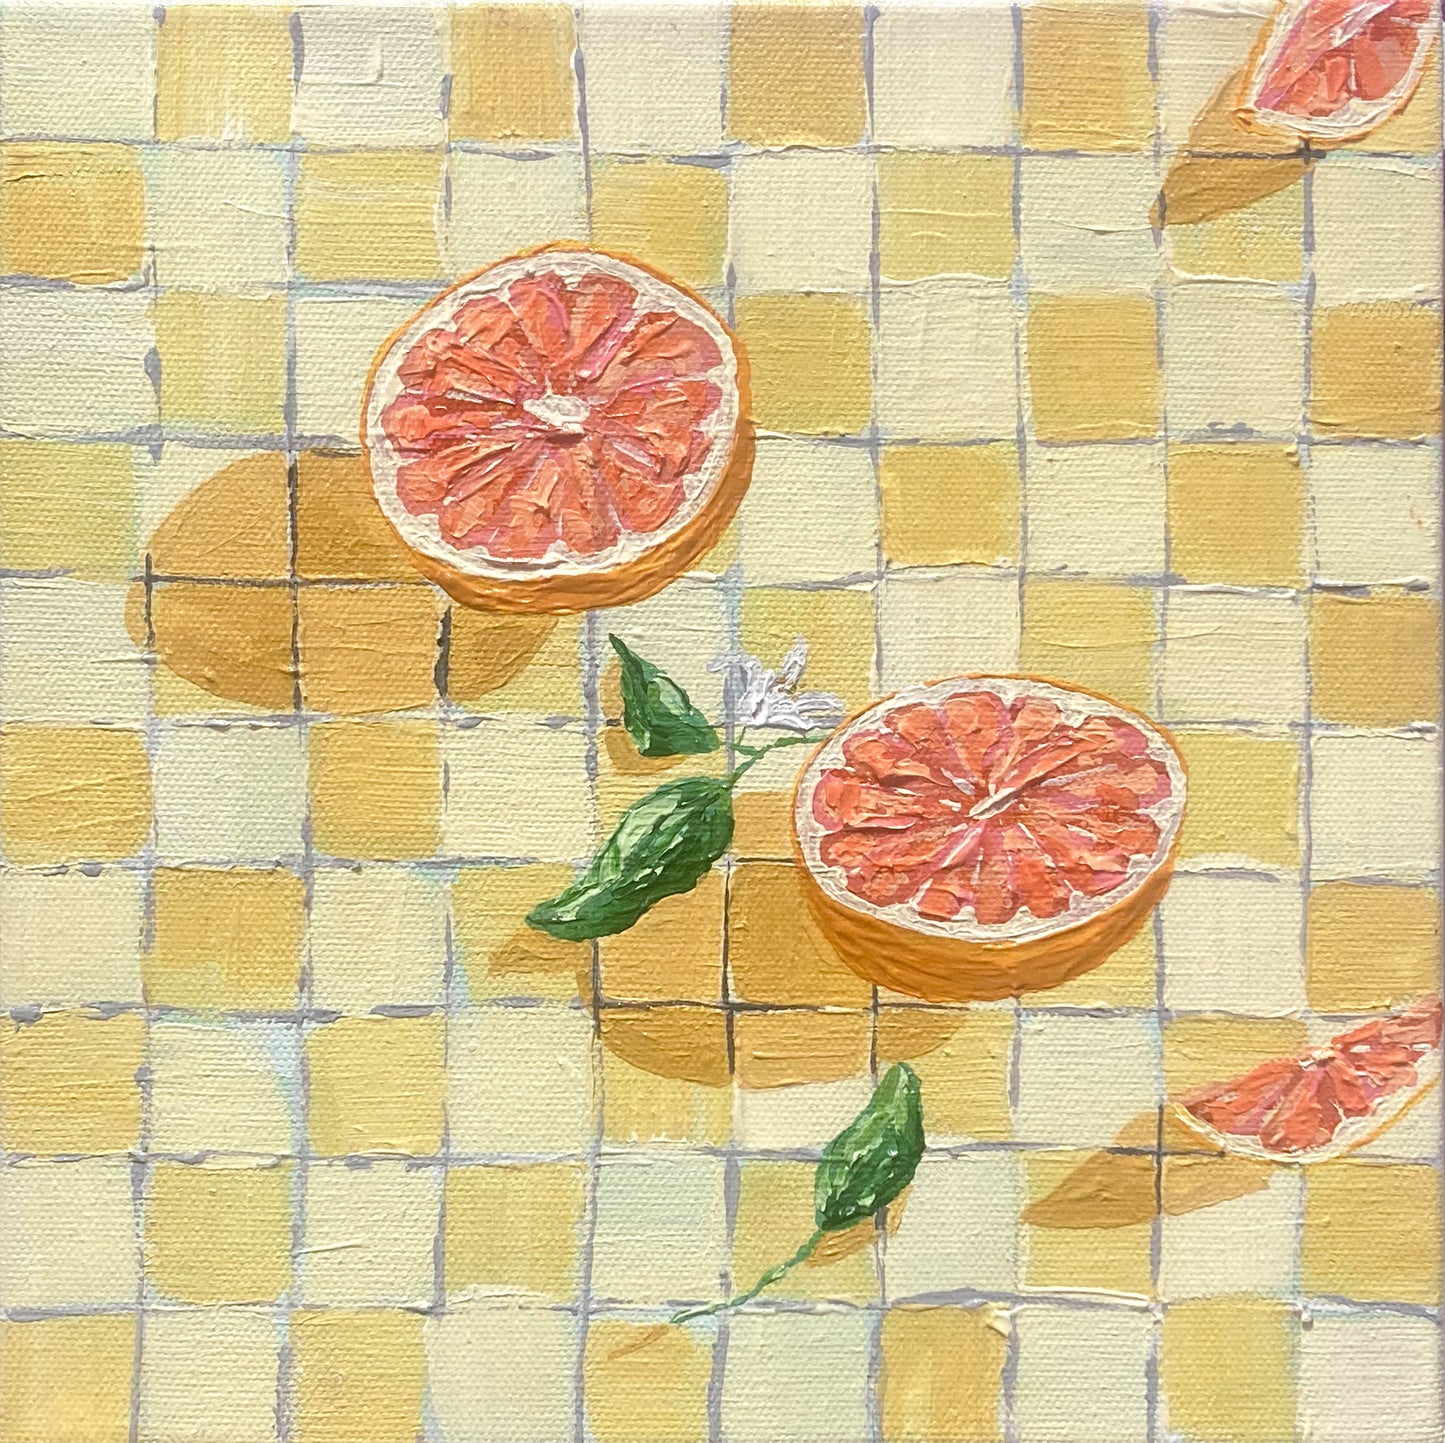 Grapefruit on Checkers